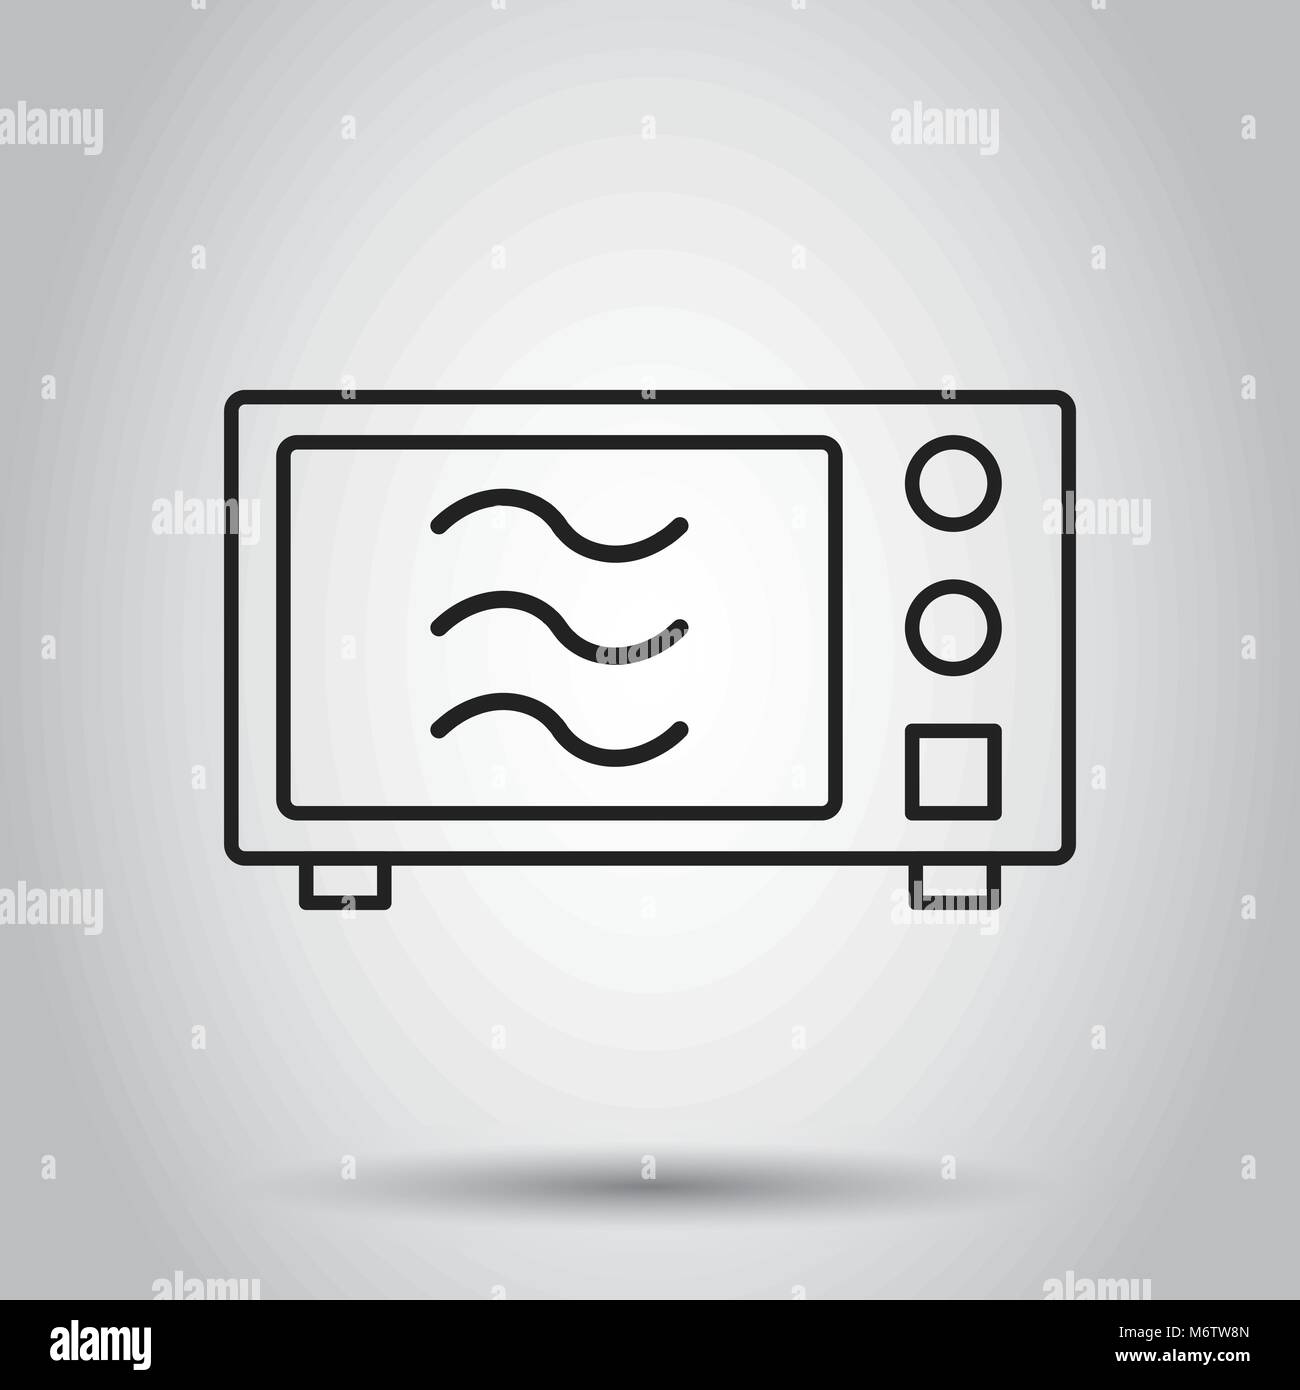 Mikrowelle flachbild Vektor icon. Mikrowelle Backofen Symbol logo  Illustration. Business Konzept einfache flache Piktogramm auf isolierten  Hintergrund Stock-Vektorgrafik - Alamy